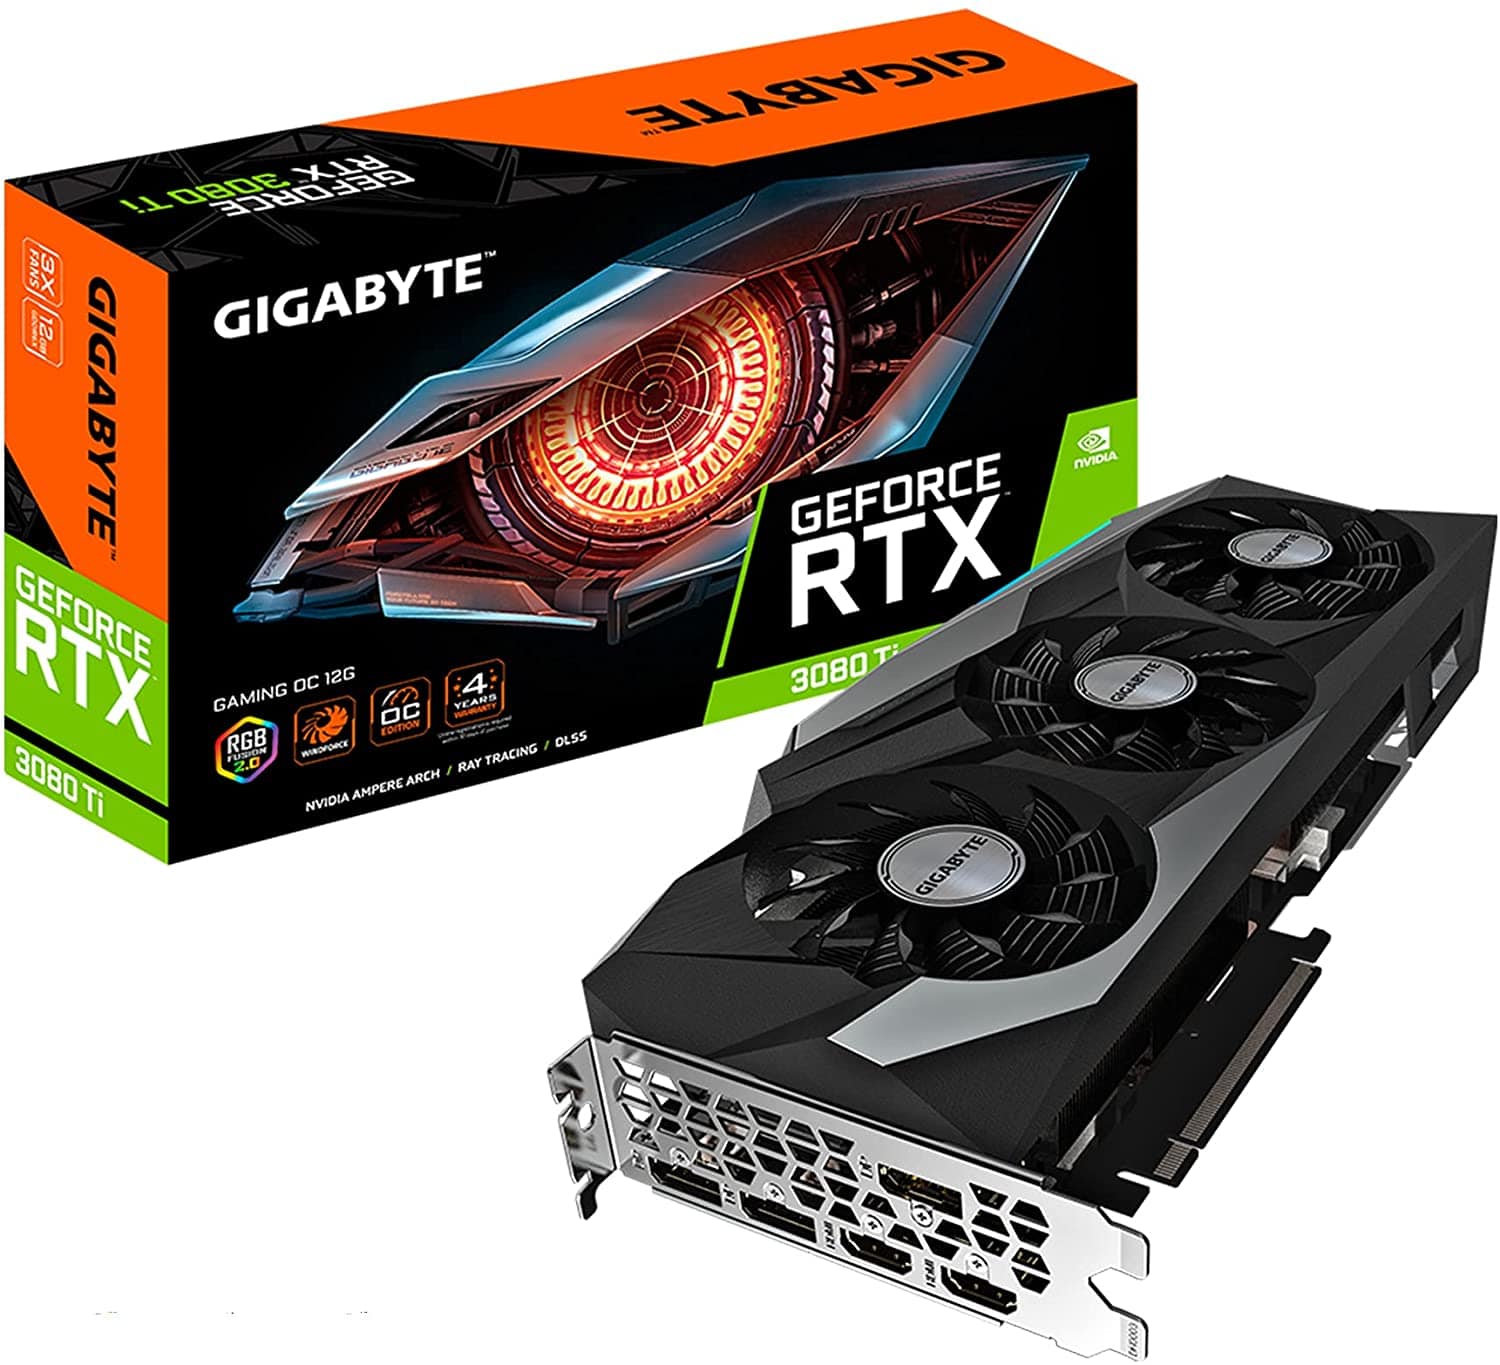 GIGABYTE GeForce RTX 3080 Ti Gaming OC